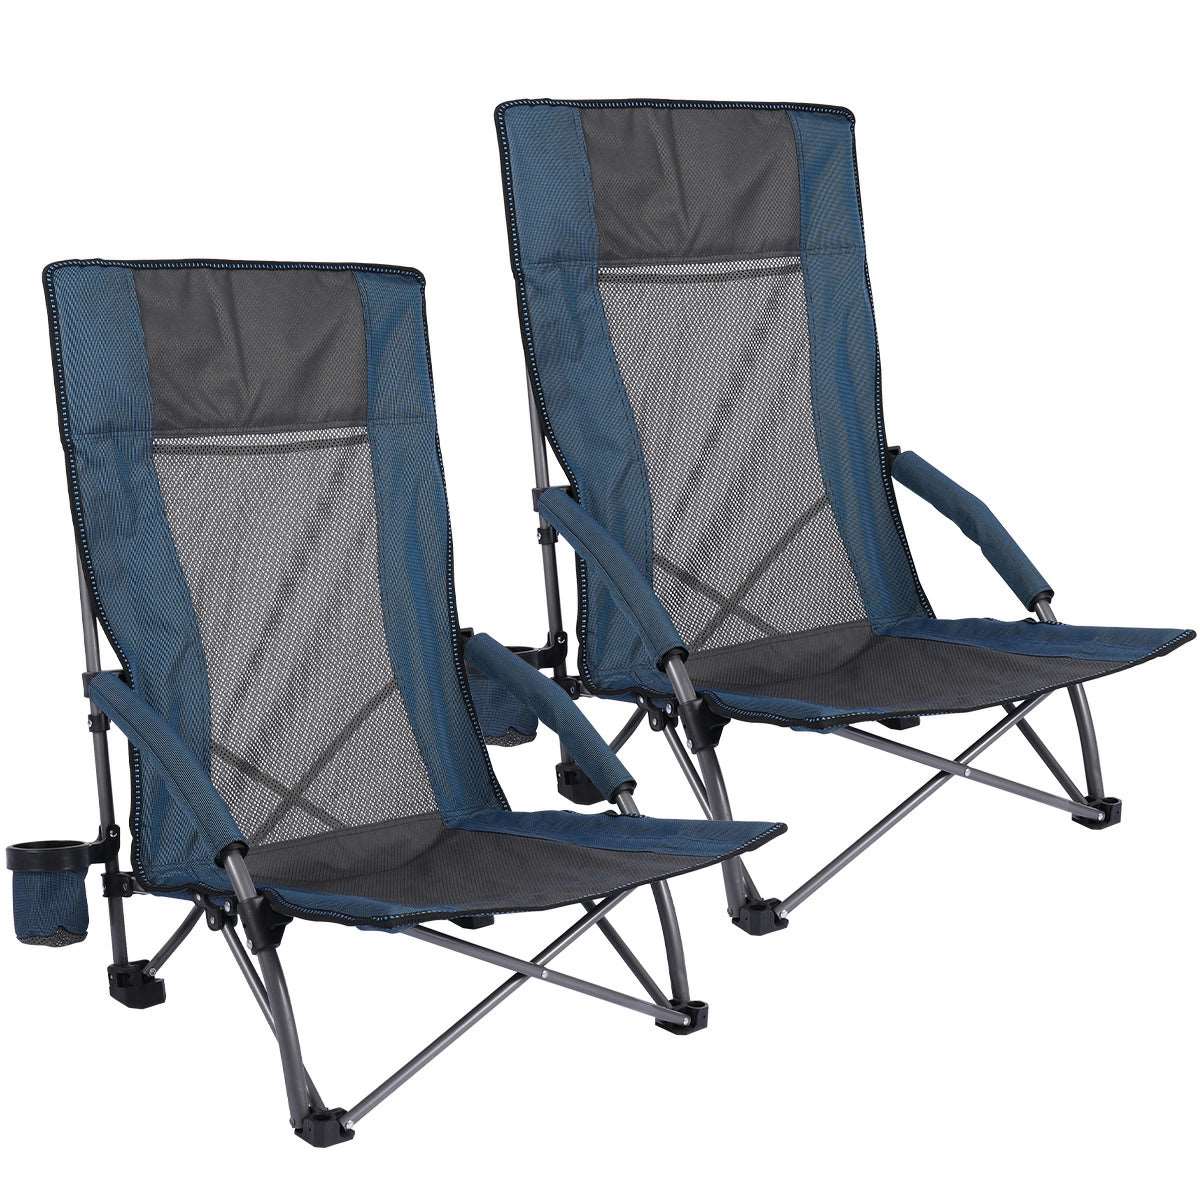 Portable Mesh Reclining Back Low Seat Beach Chair